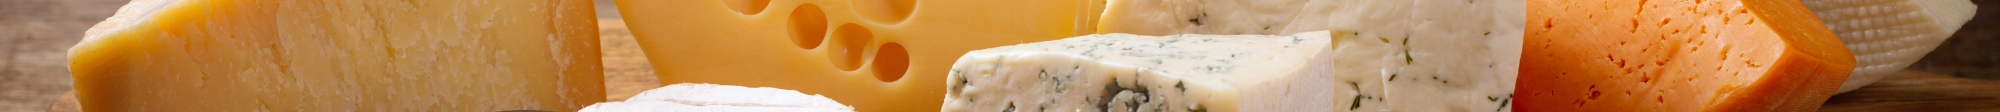 Comprar queso vaca online gourmet | Mixtura Gourmet